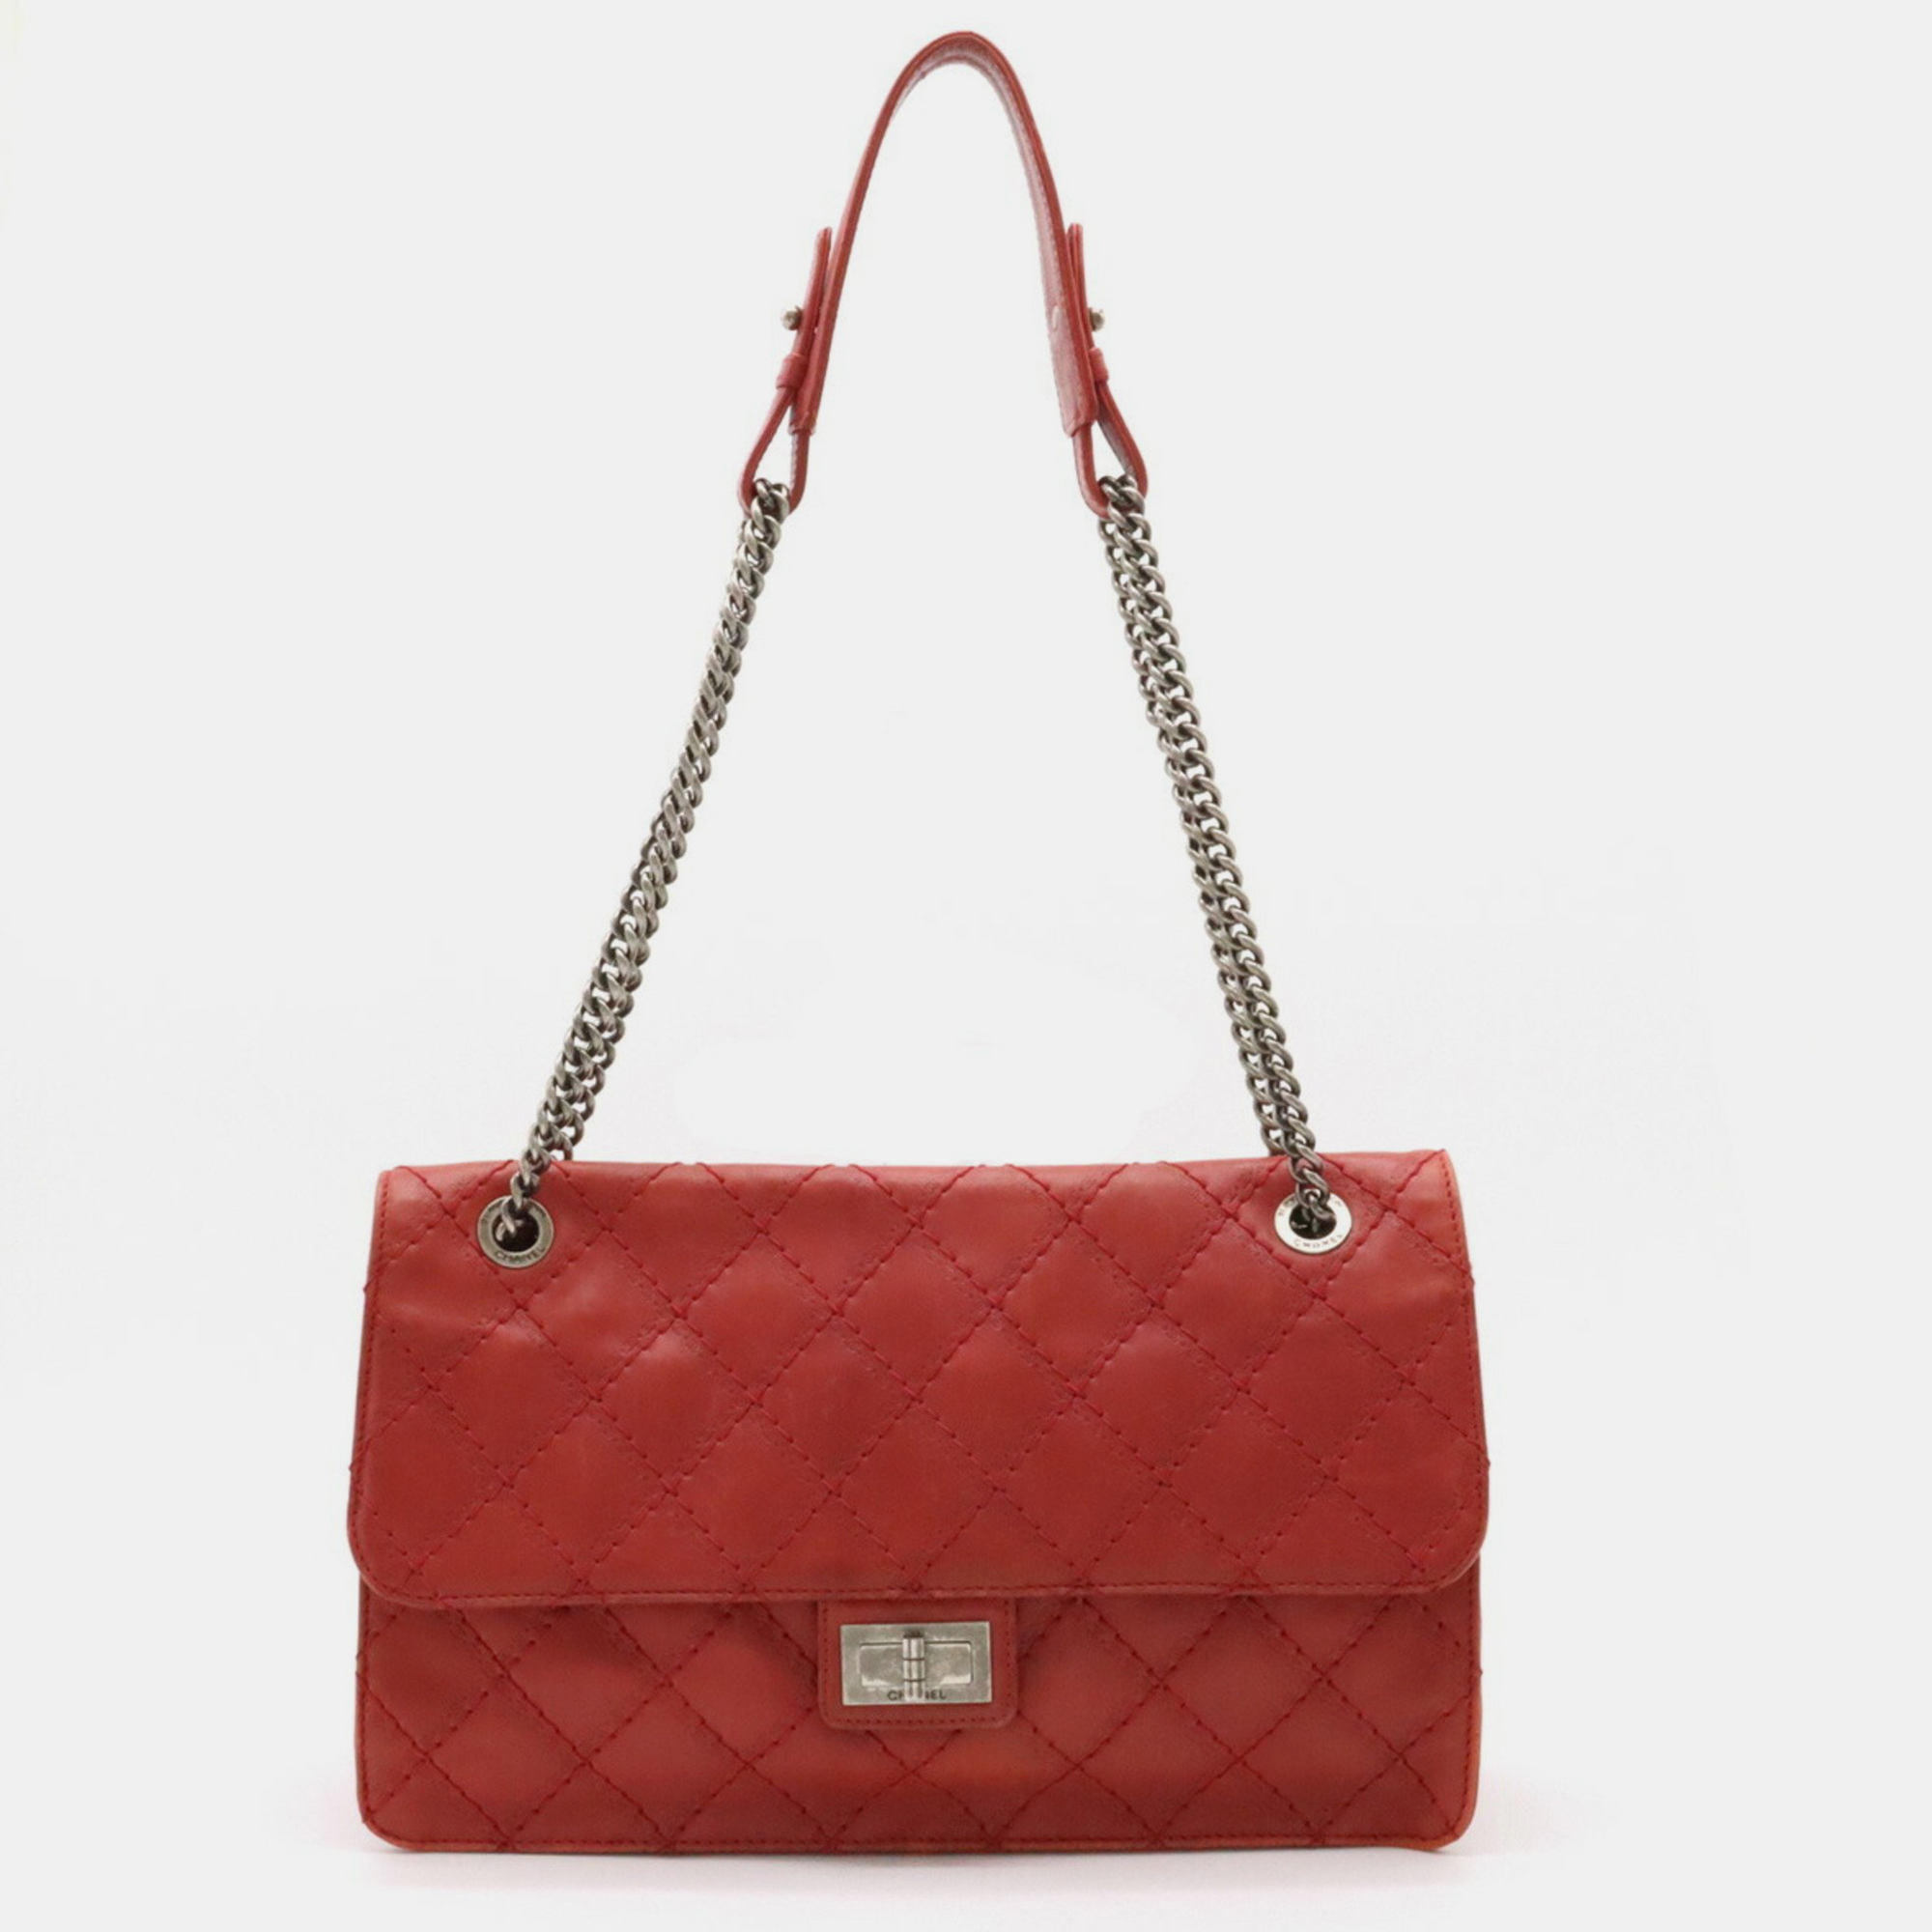 Chanel red  leather reissue 226  shoulder bag